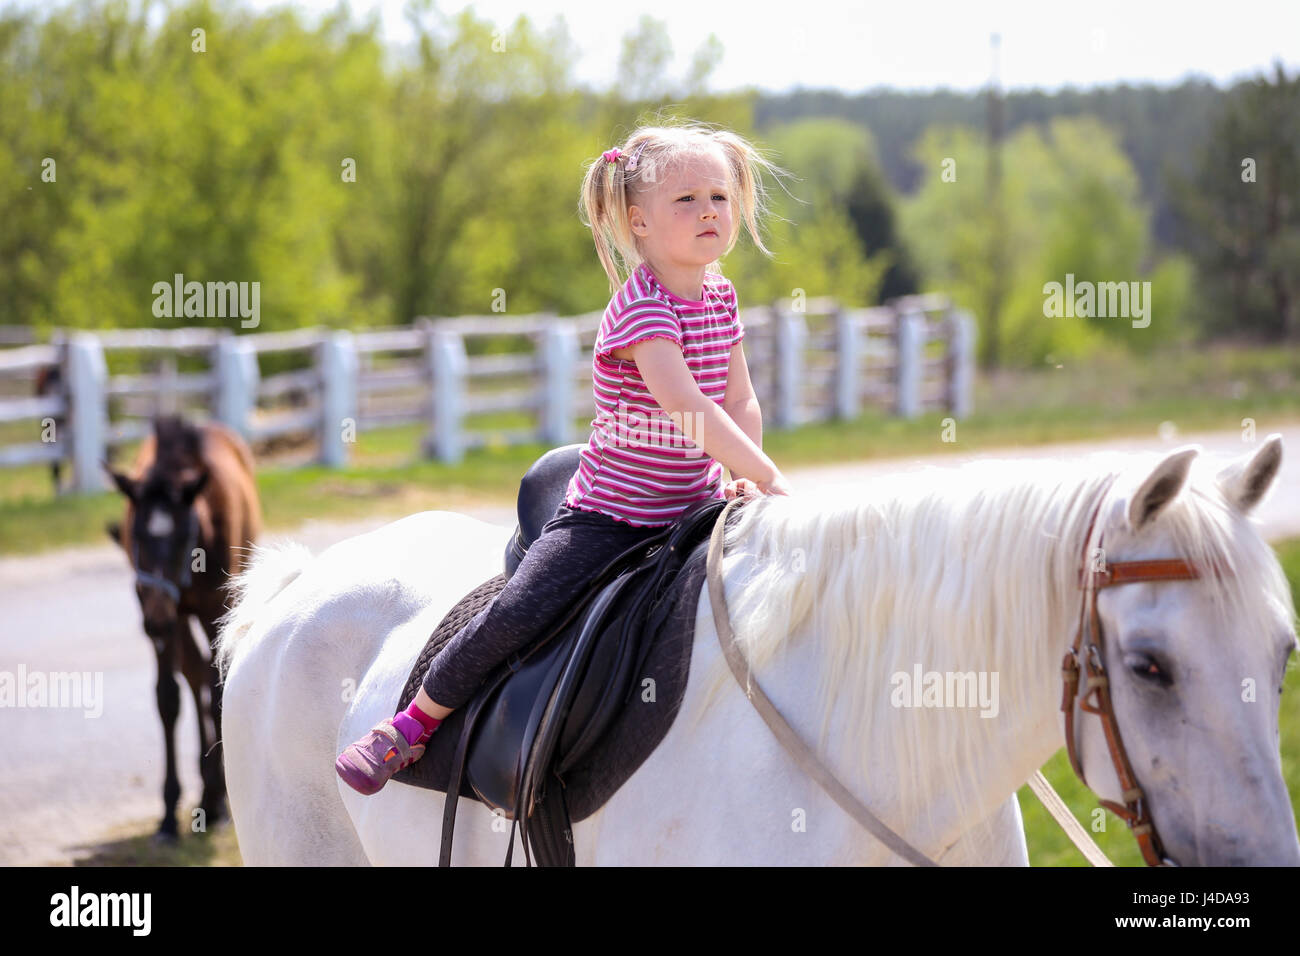 Little girl riding a white horse Stock Photo - Alamy